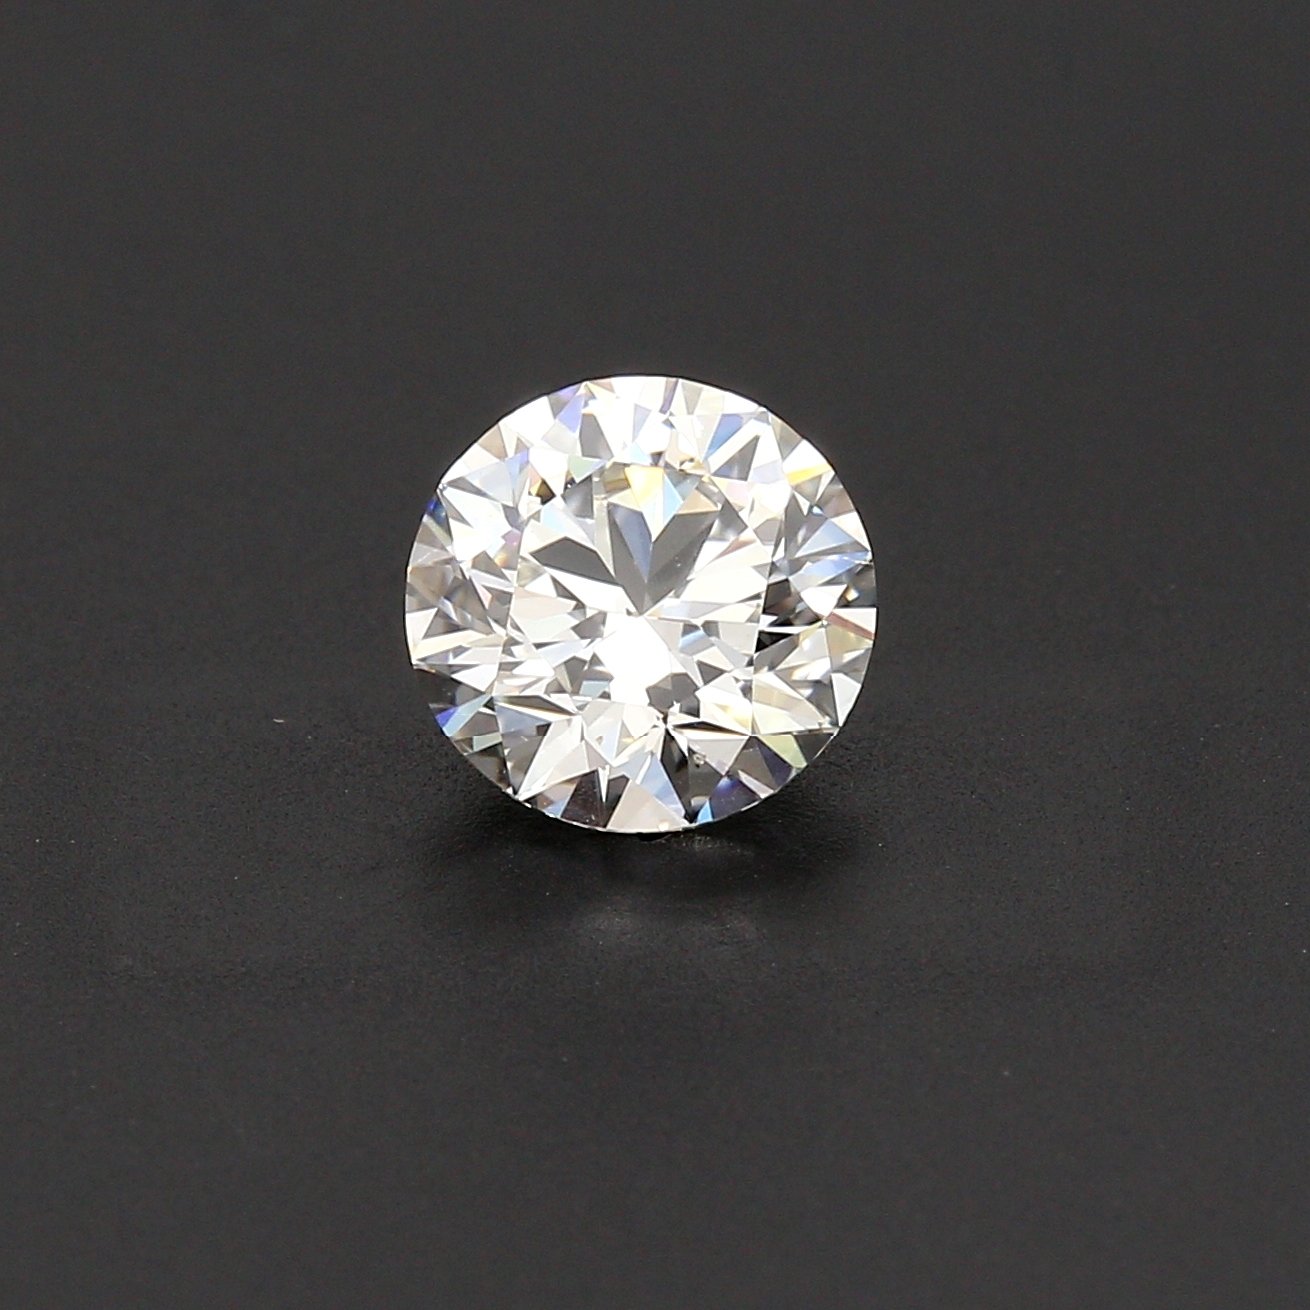 1.40ct Round Brilliant Cut Diamond, SI1-I -GIA/INSC